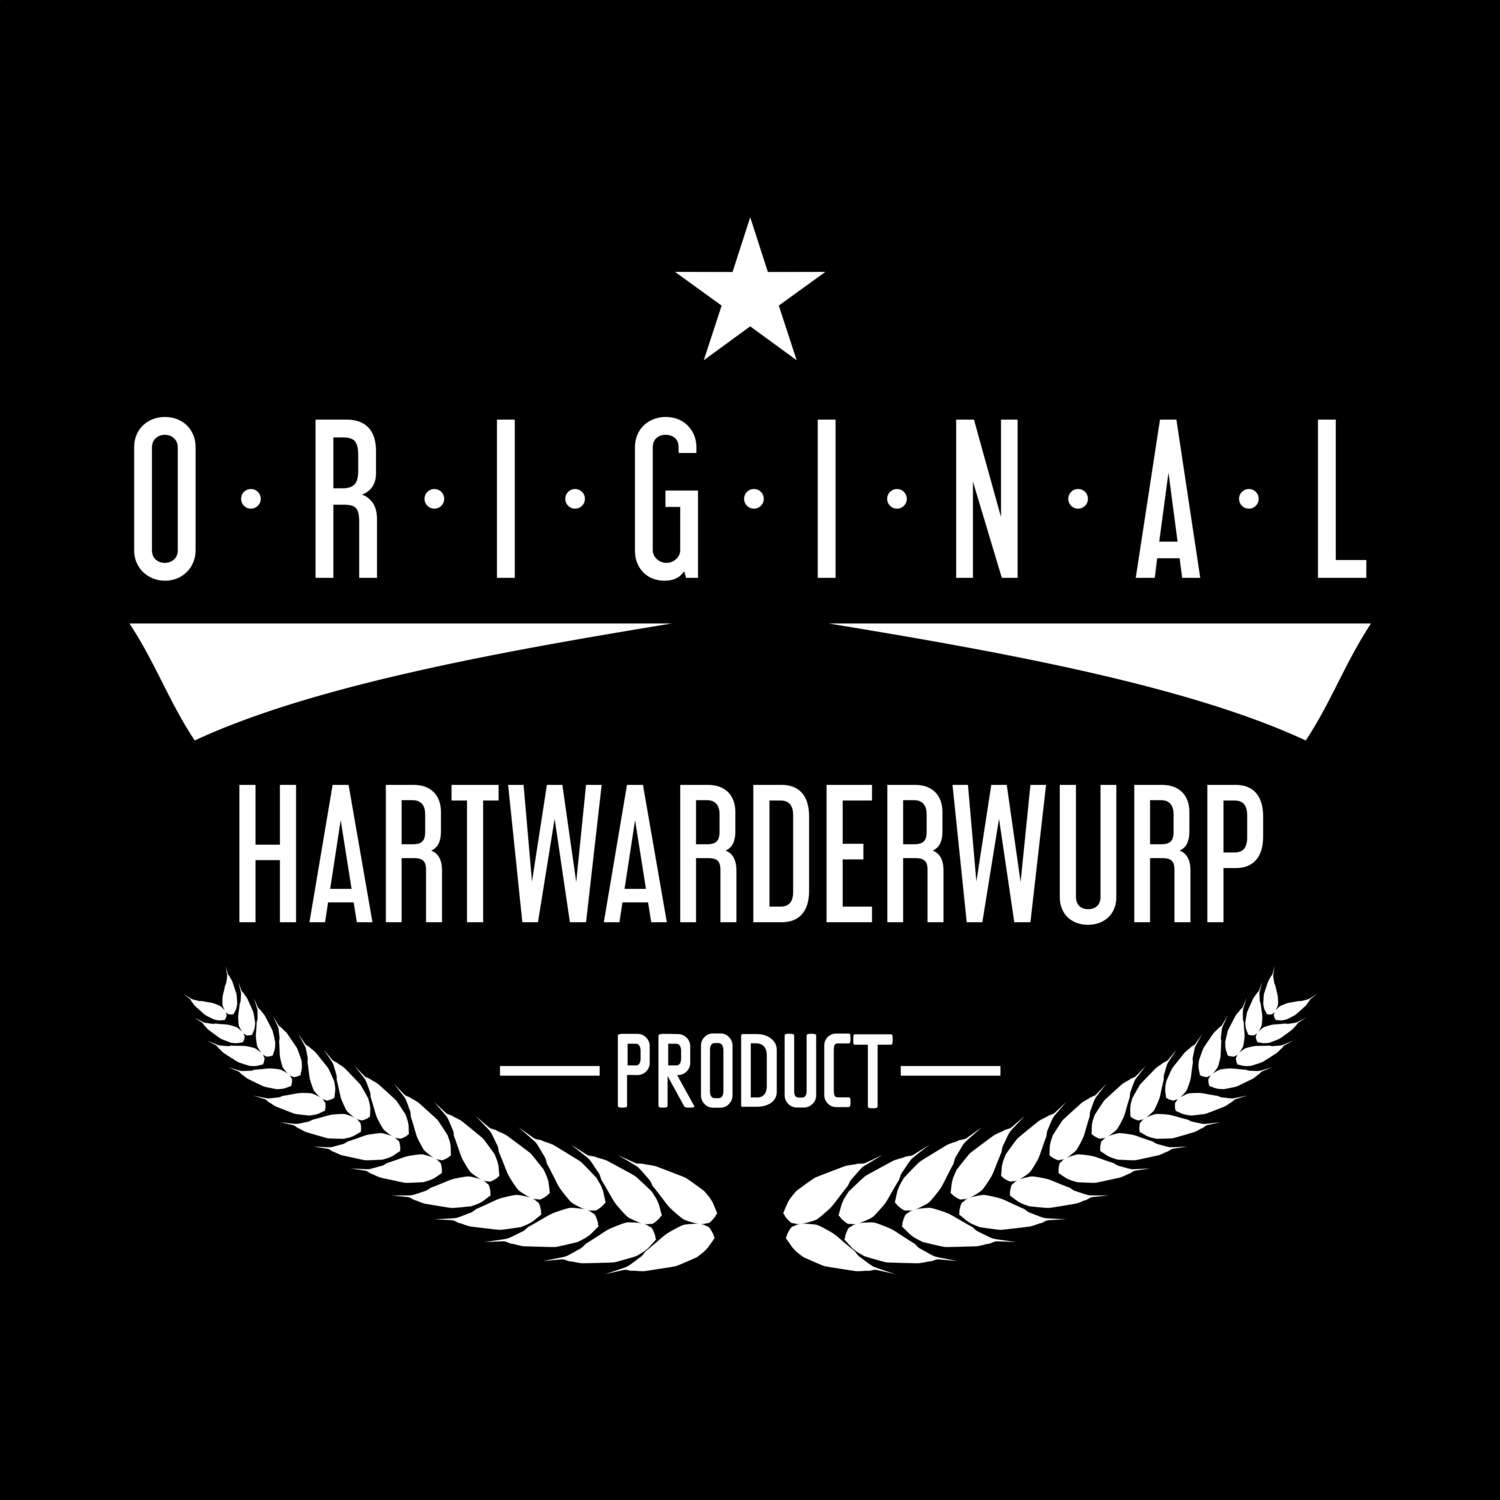 Hartwarderwurp T-Shirt »Original Product«